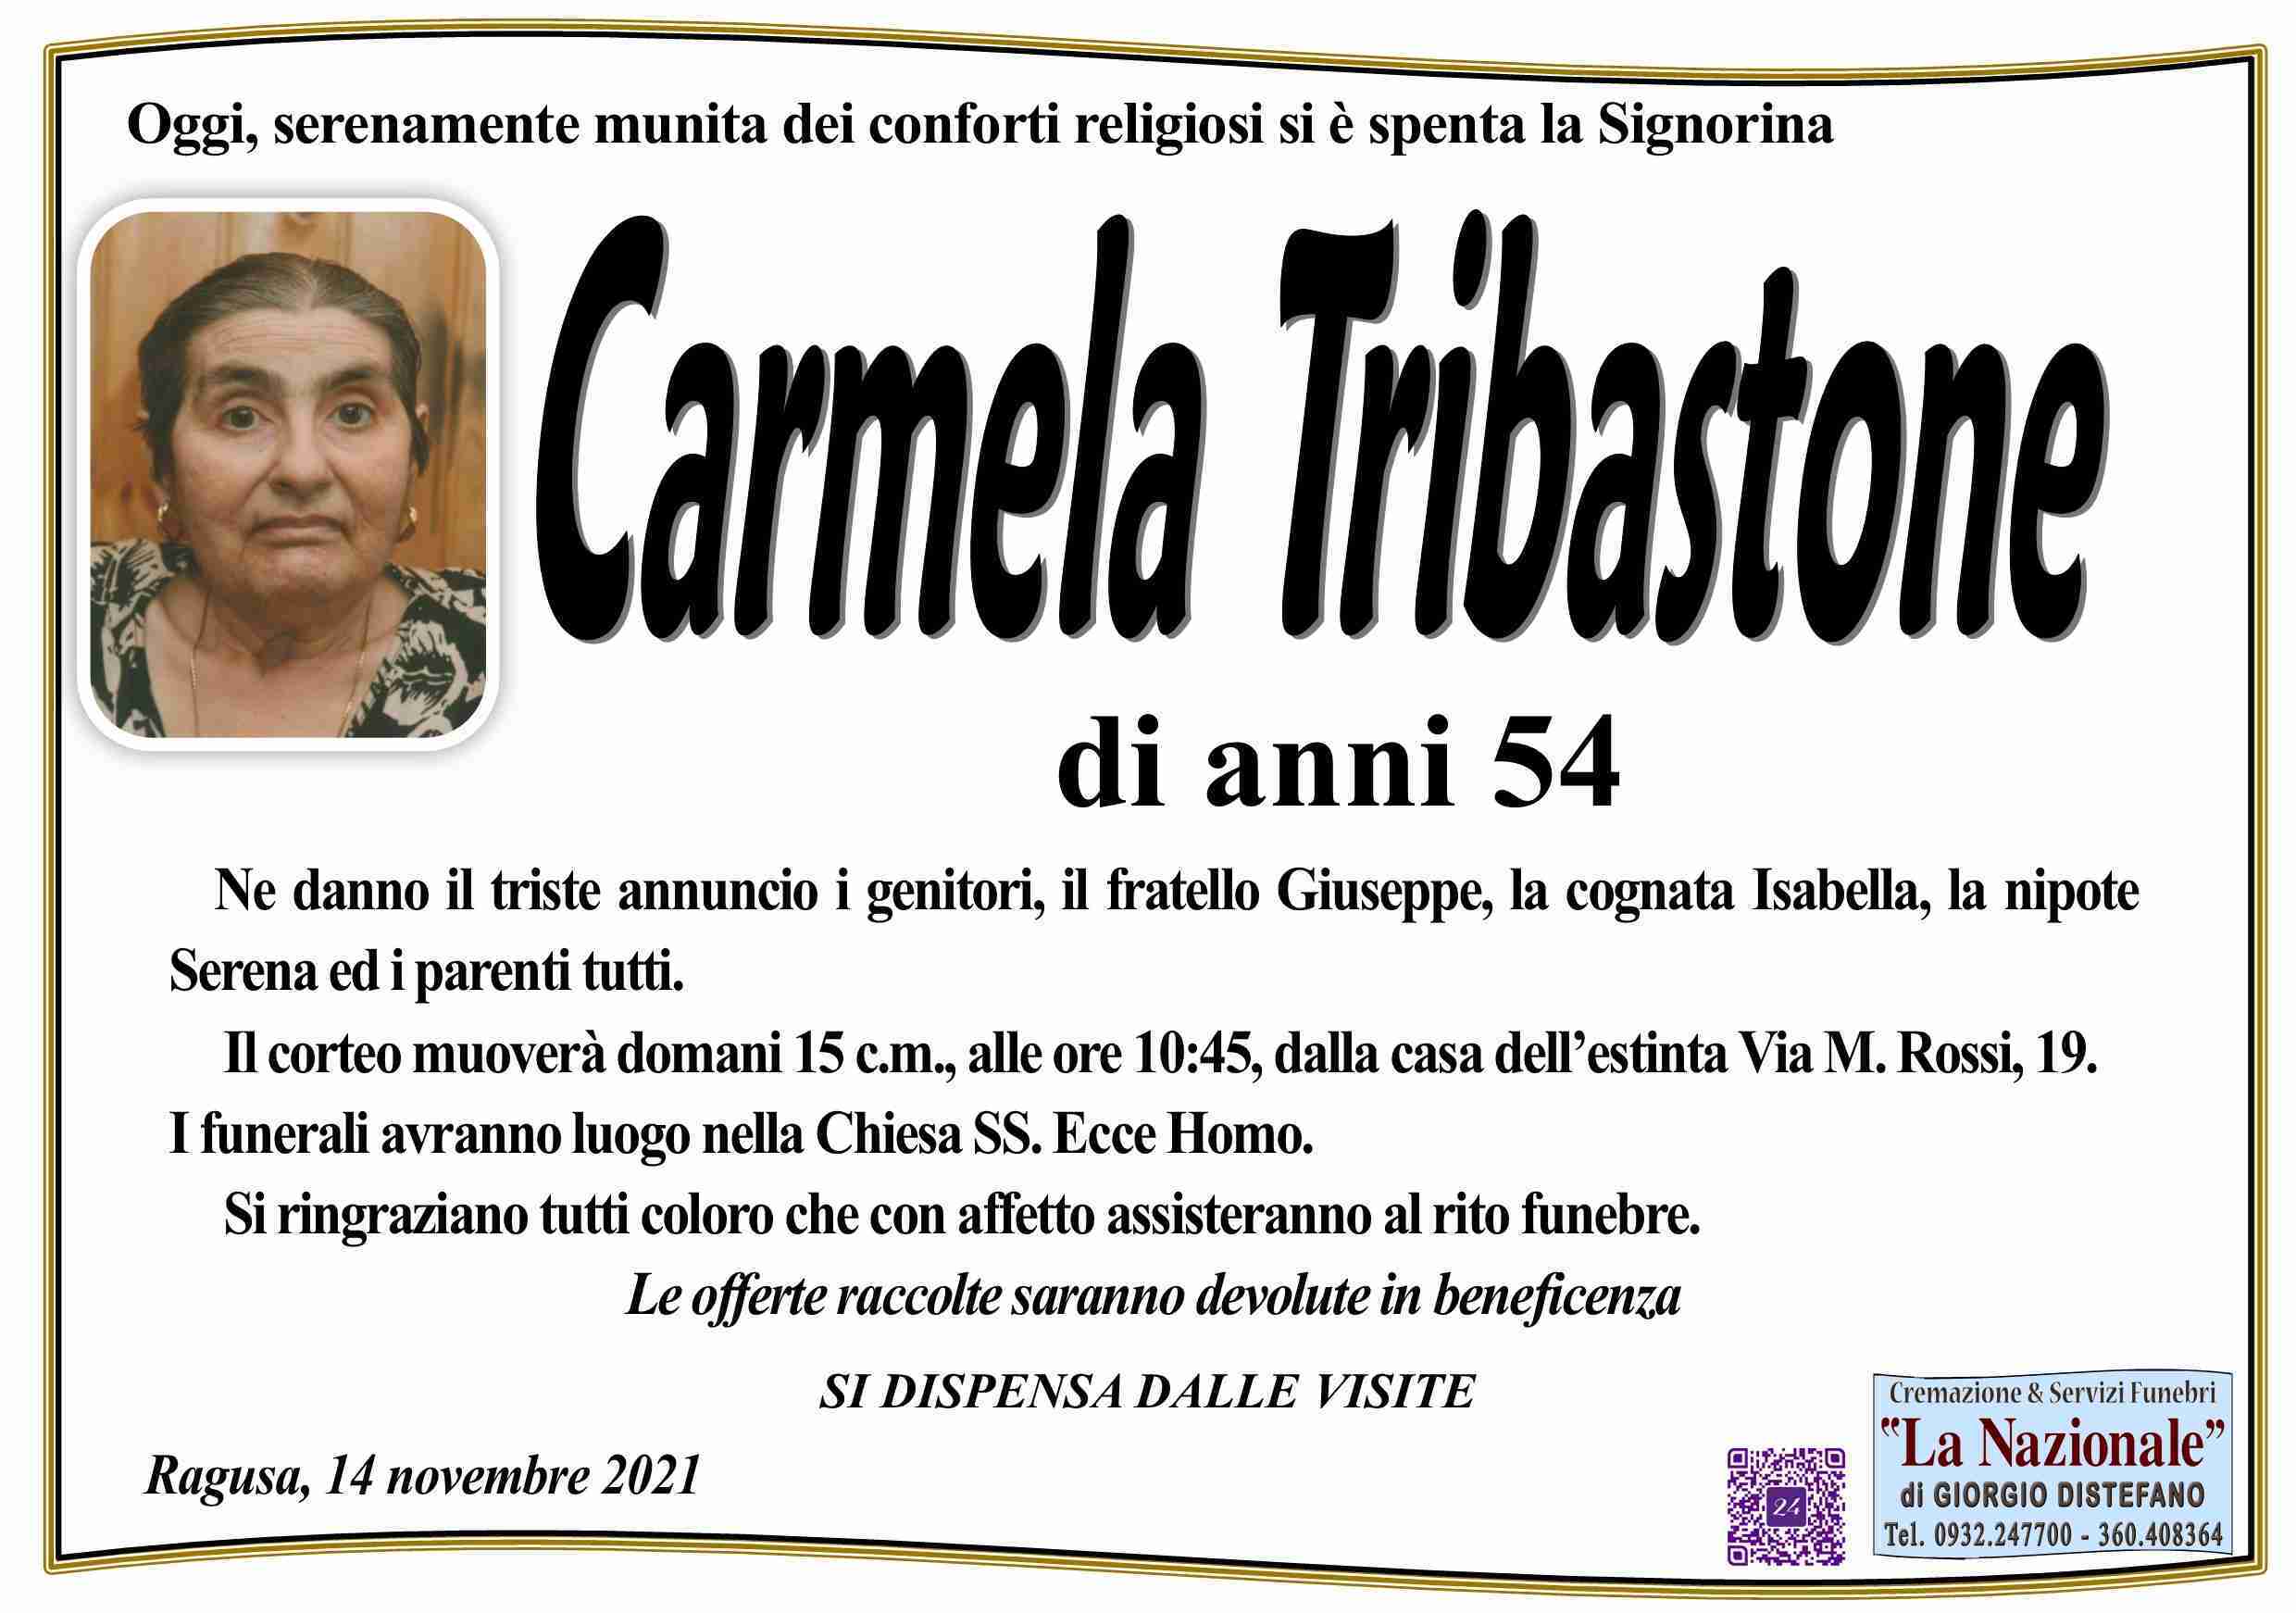 Carmela Tribastone